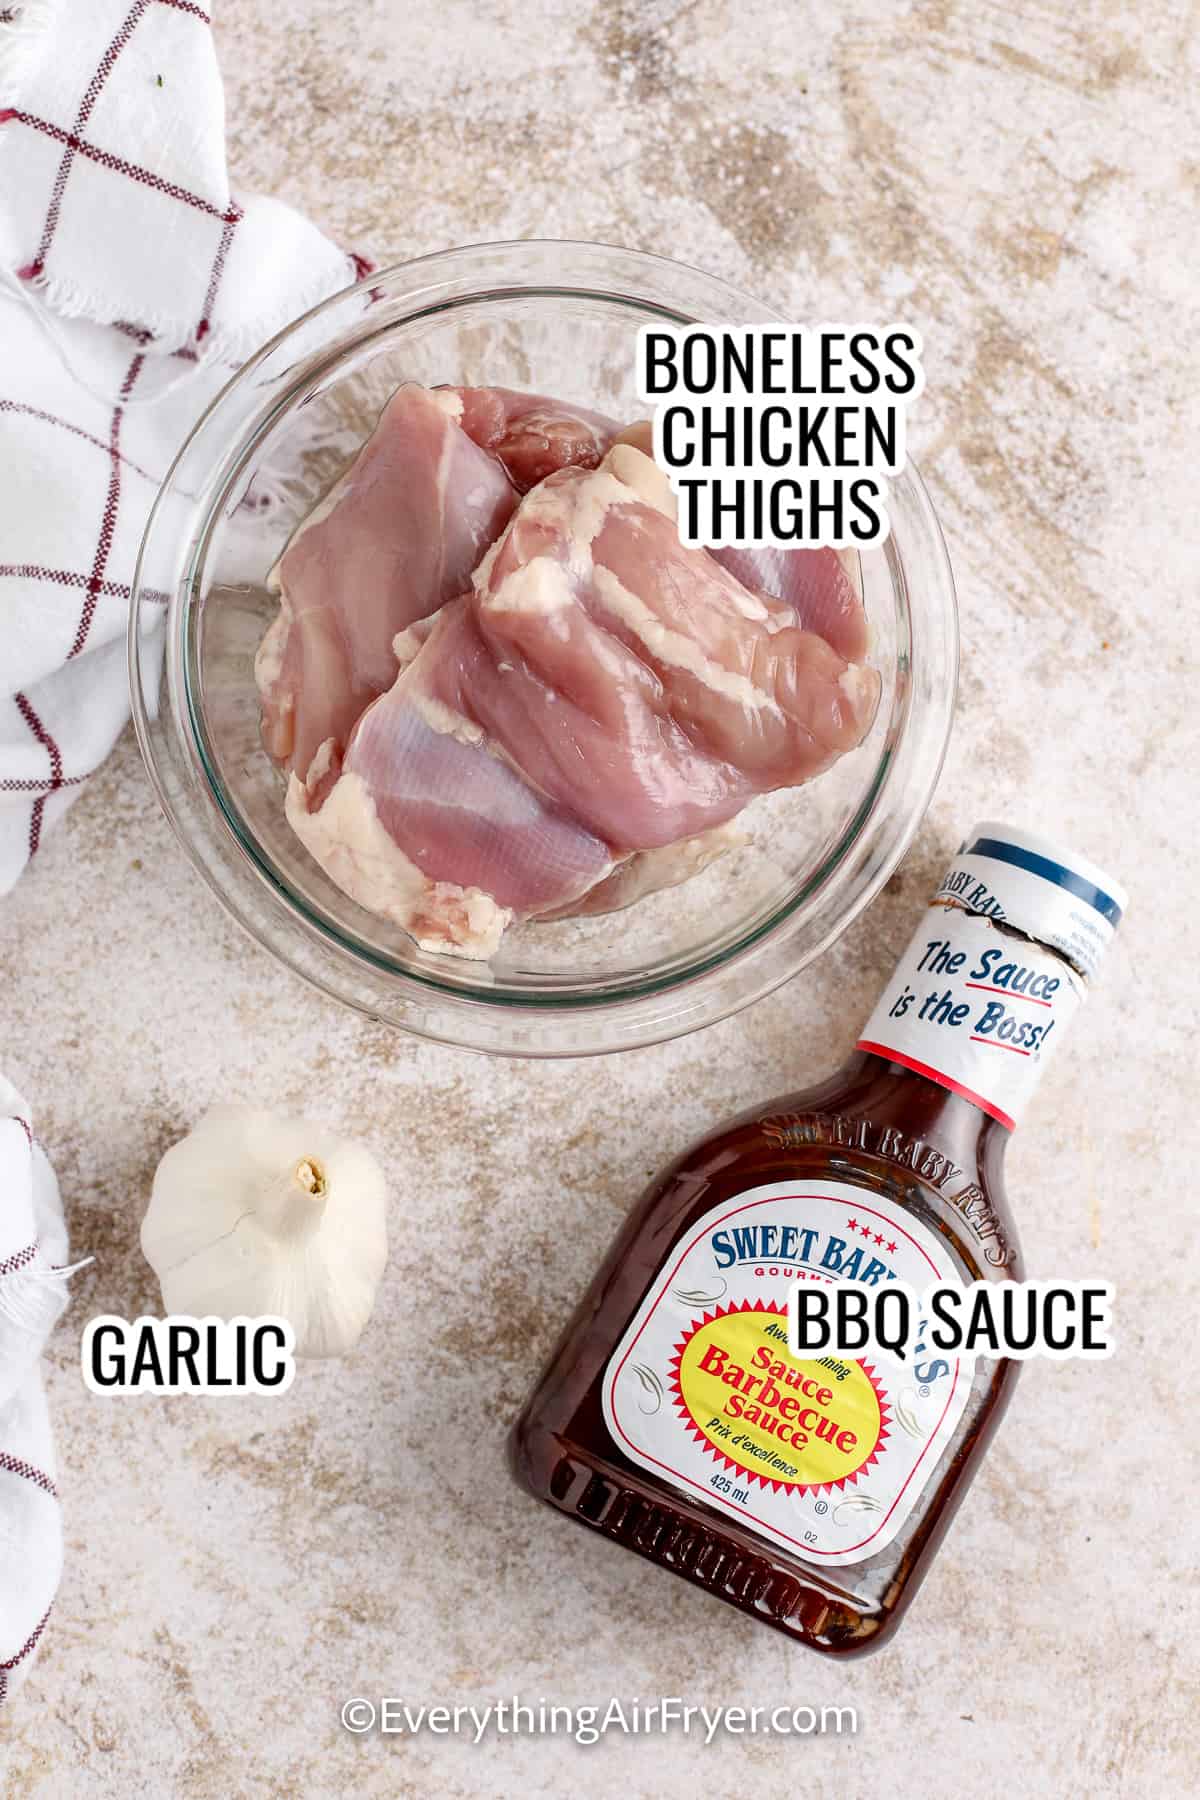 ingredients assembled to make bbq boneless chicken thighs, including chicken thighs, garlic, and bbq sauce